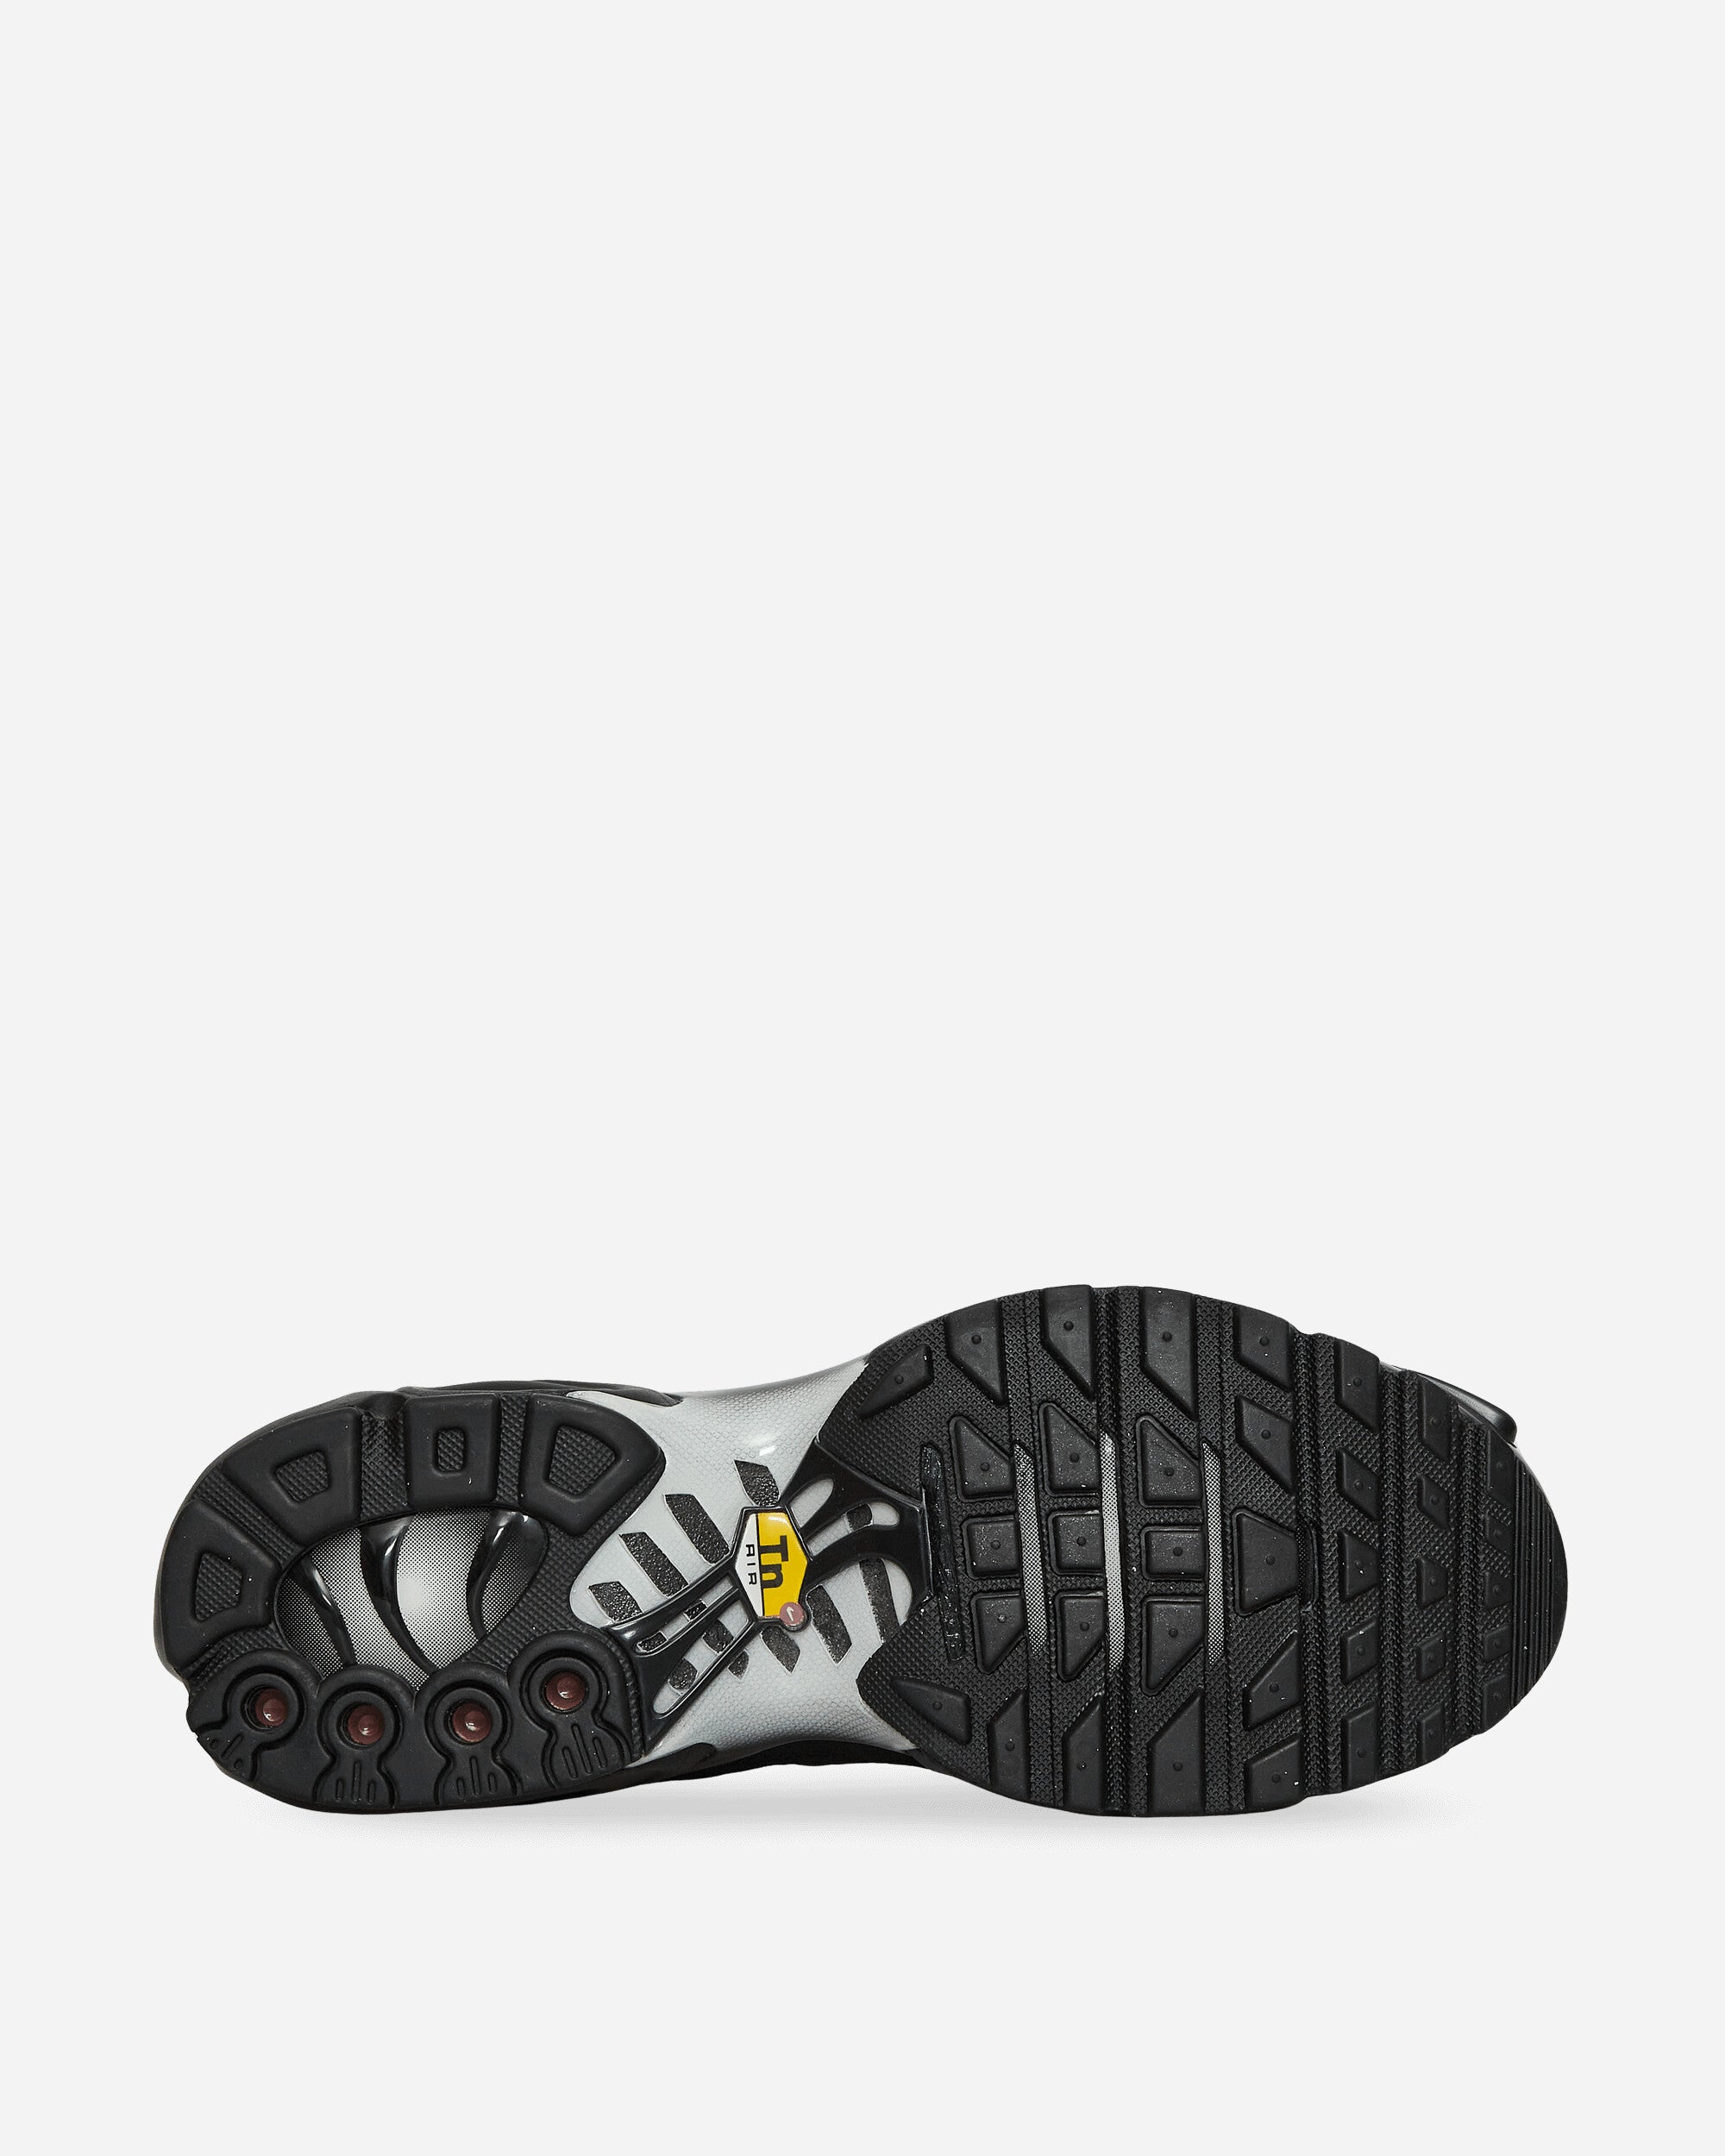 Nike Wmns Nike Air Max Plus Black/Anthracite/Sail Sneakers Low FV1169-001